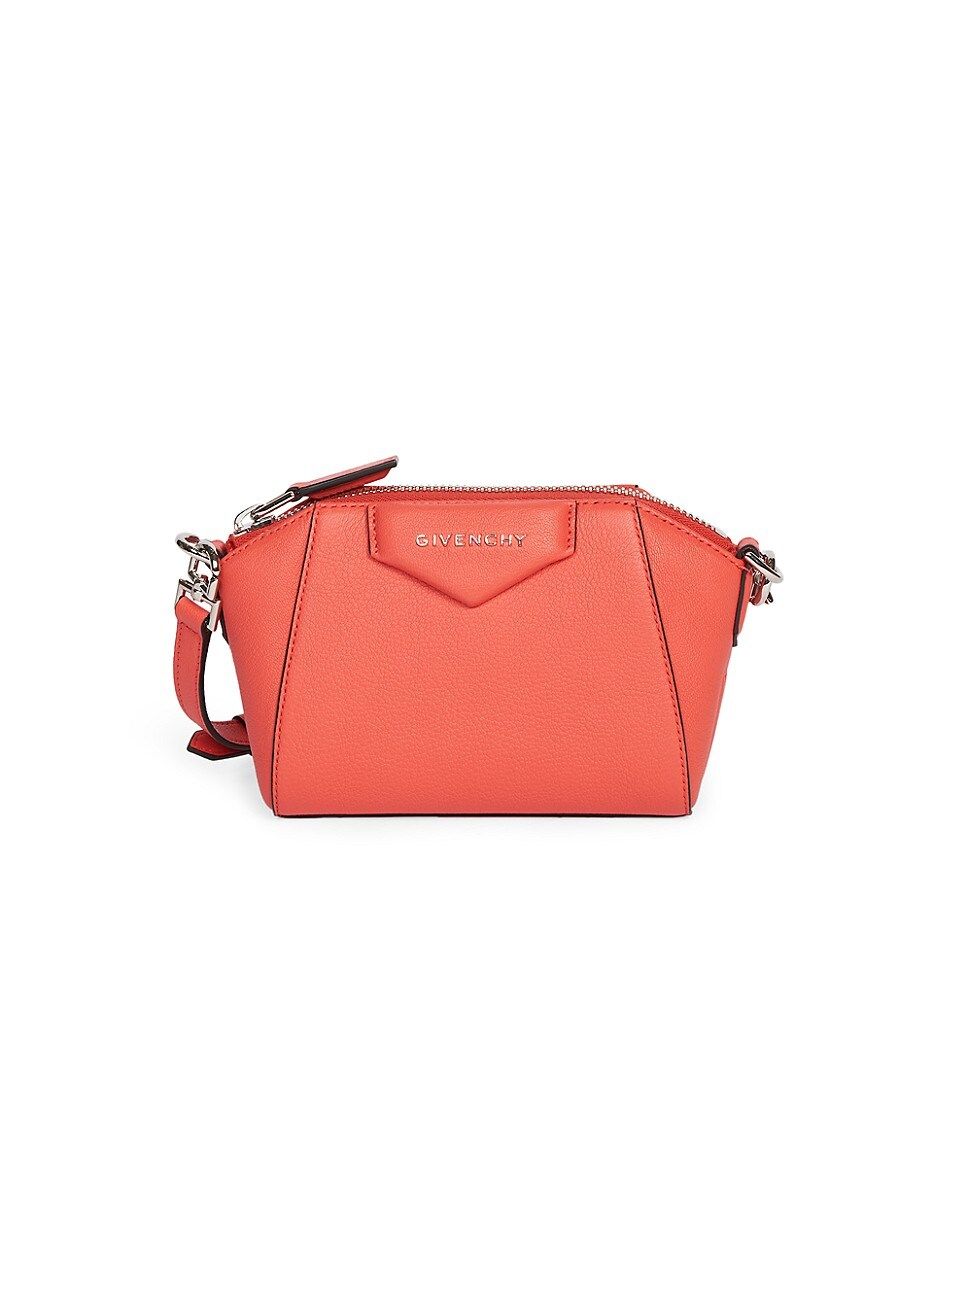 Givenchy Women's Nano Antigona Leather Crossbody Bag - Coral | Saks Fifth Avenue